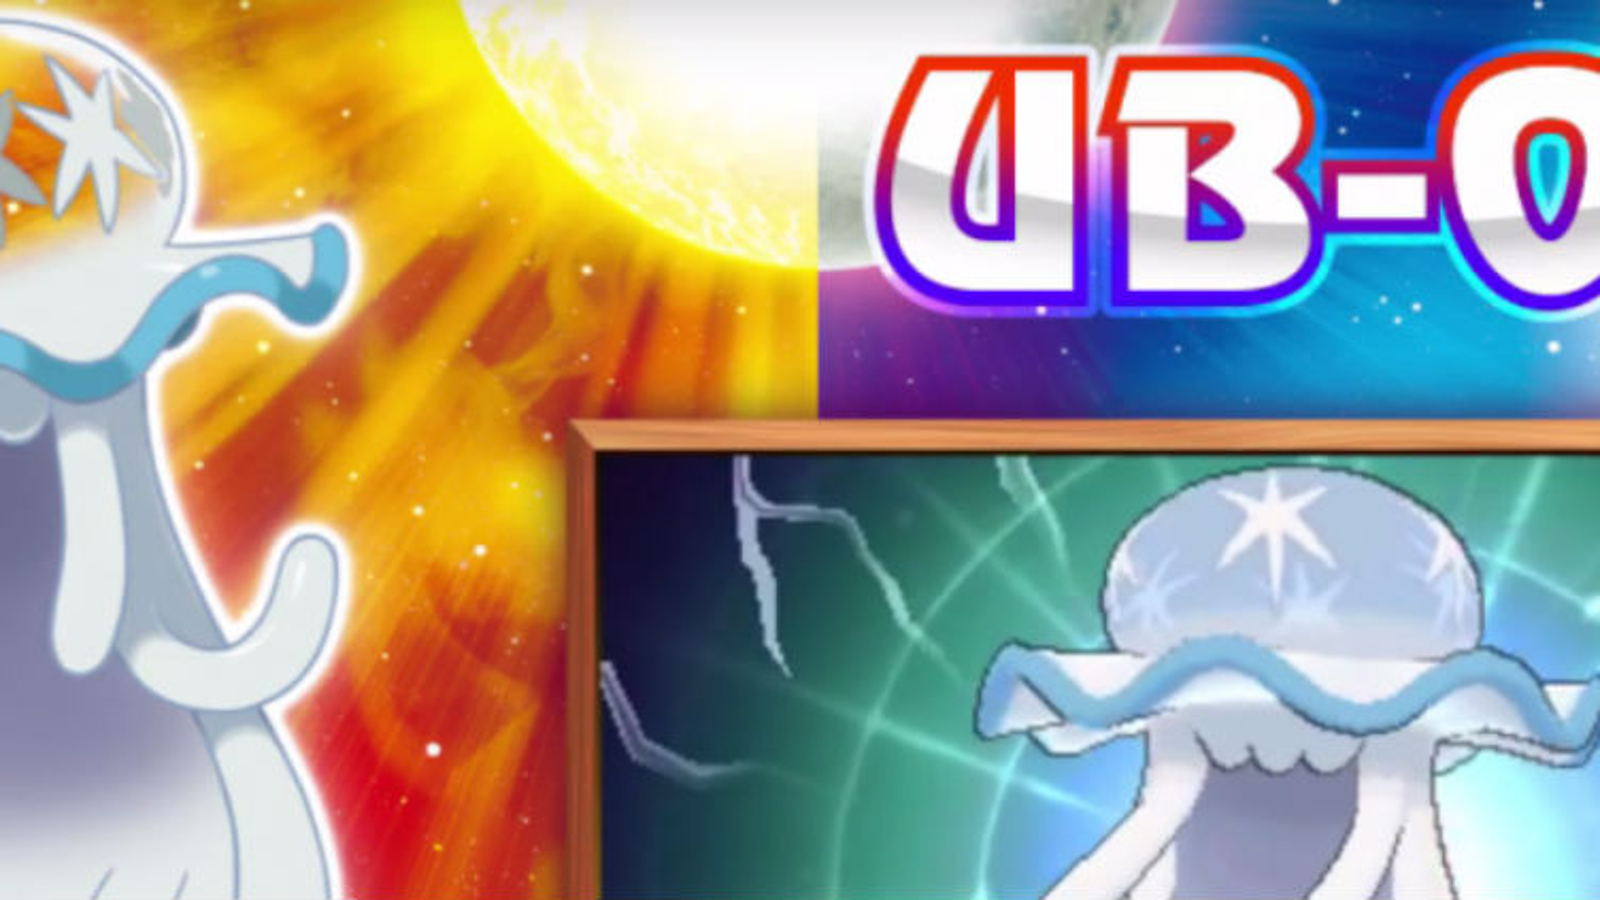 New Ultra Beasts - Pokemon Ultra Sun